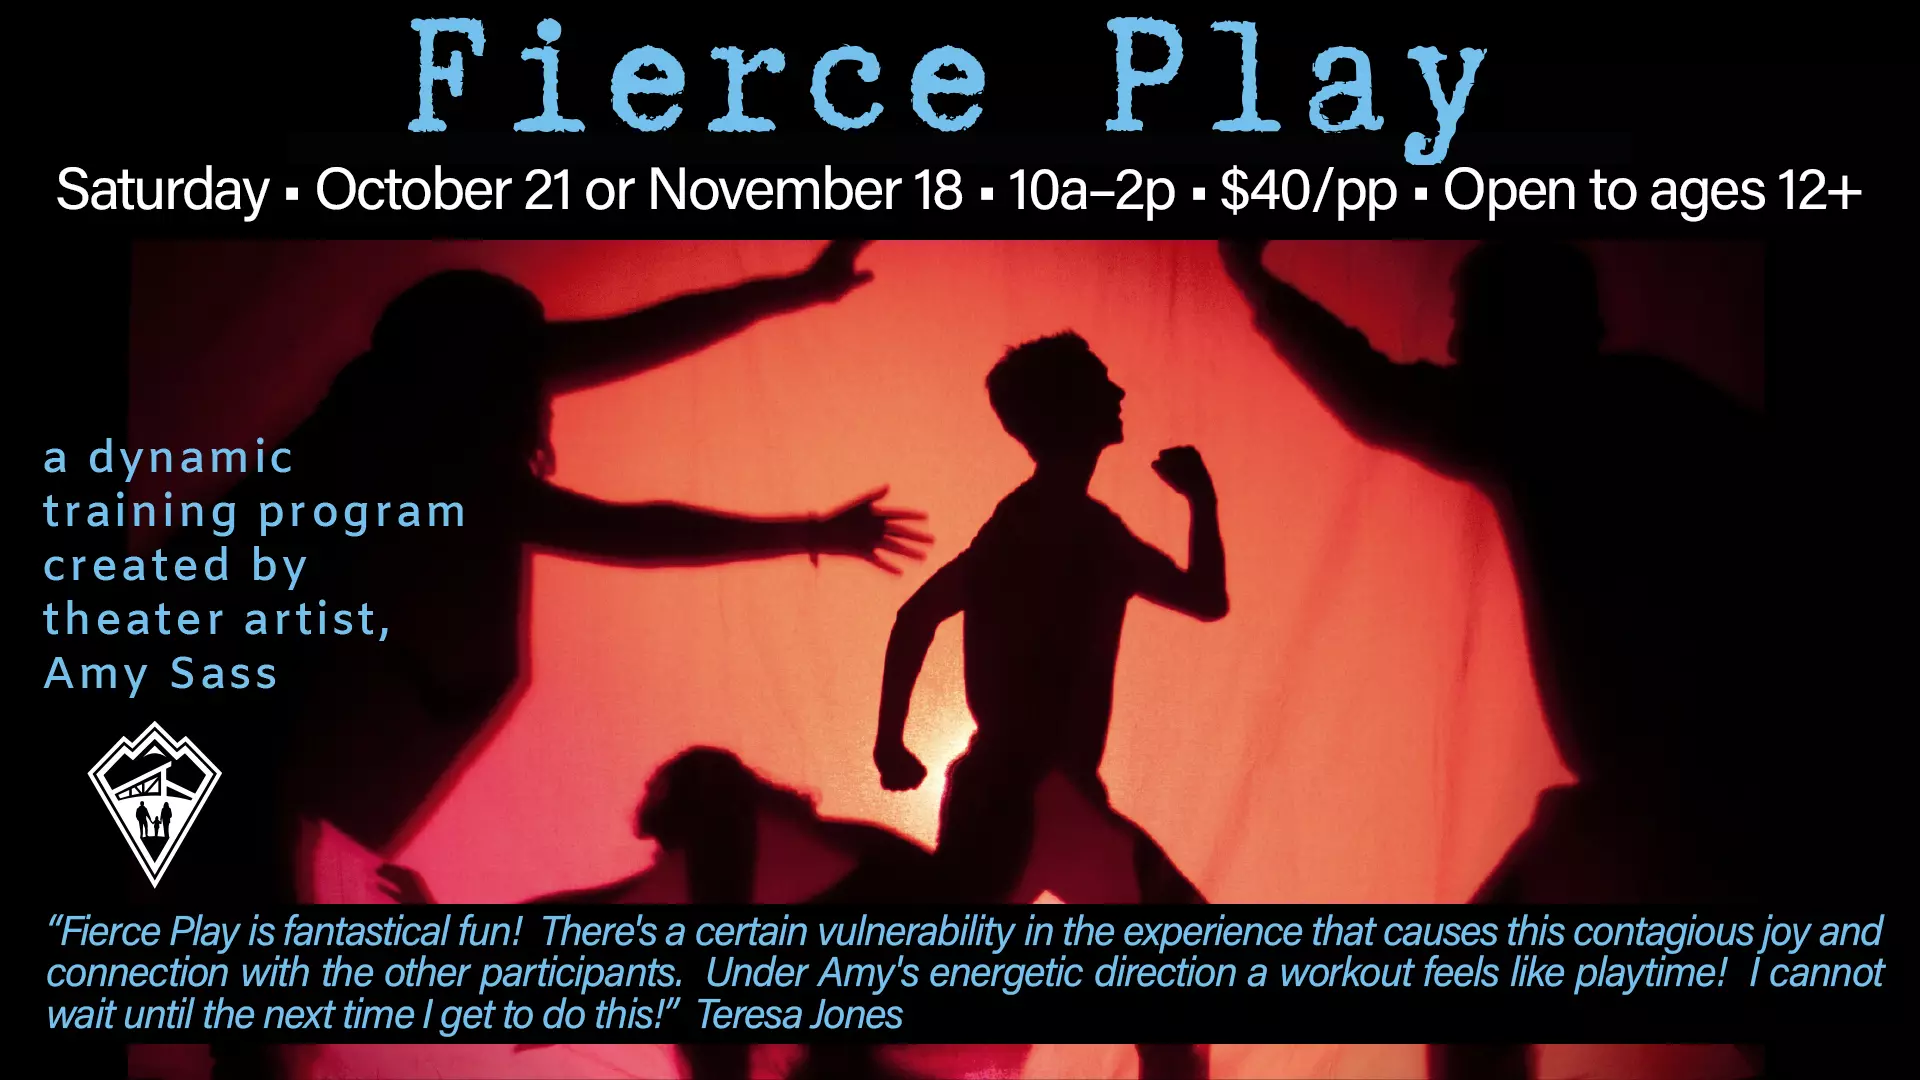 Fierce Play theater drama art fitness